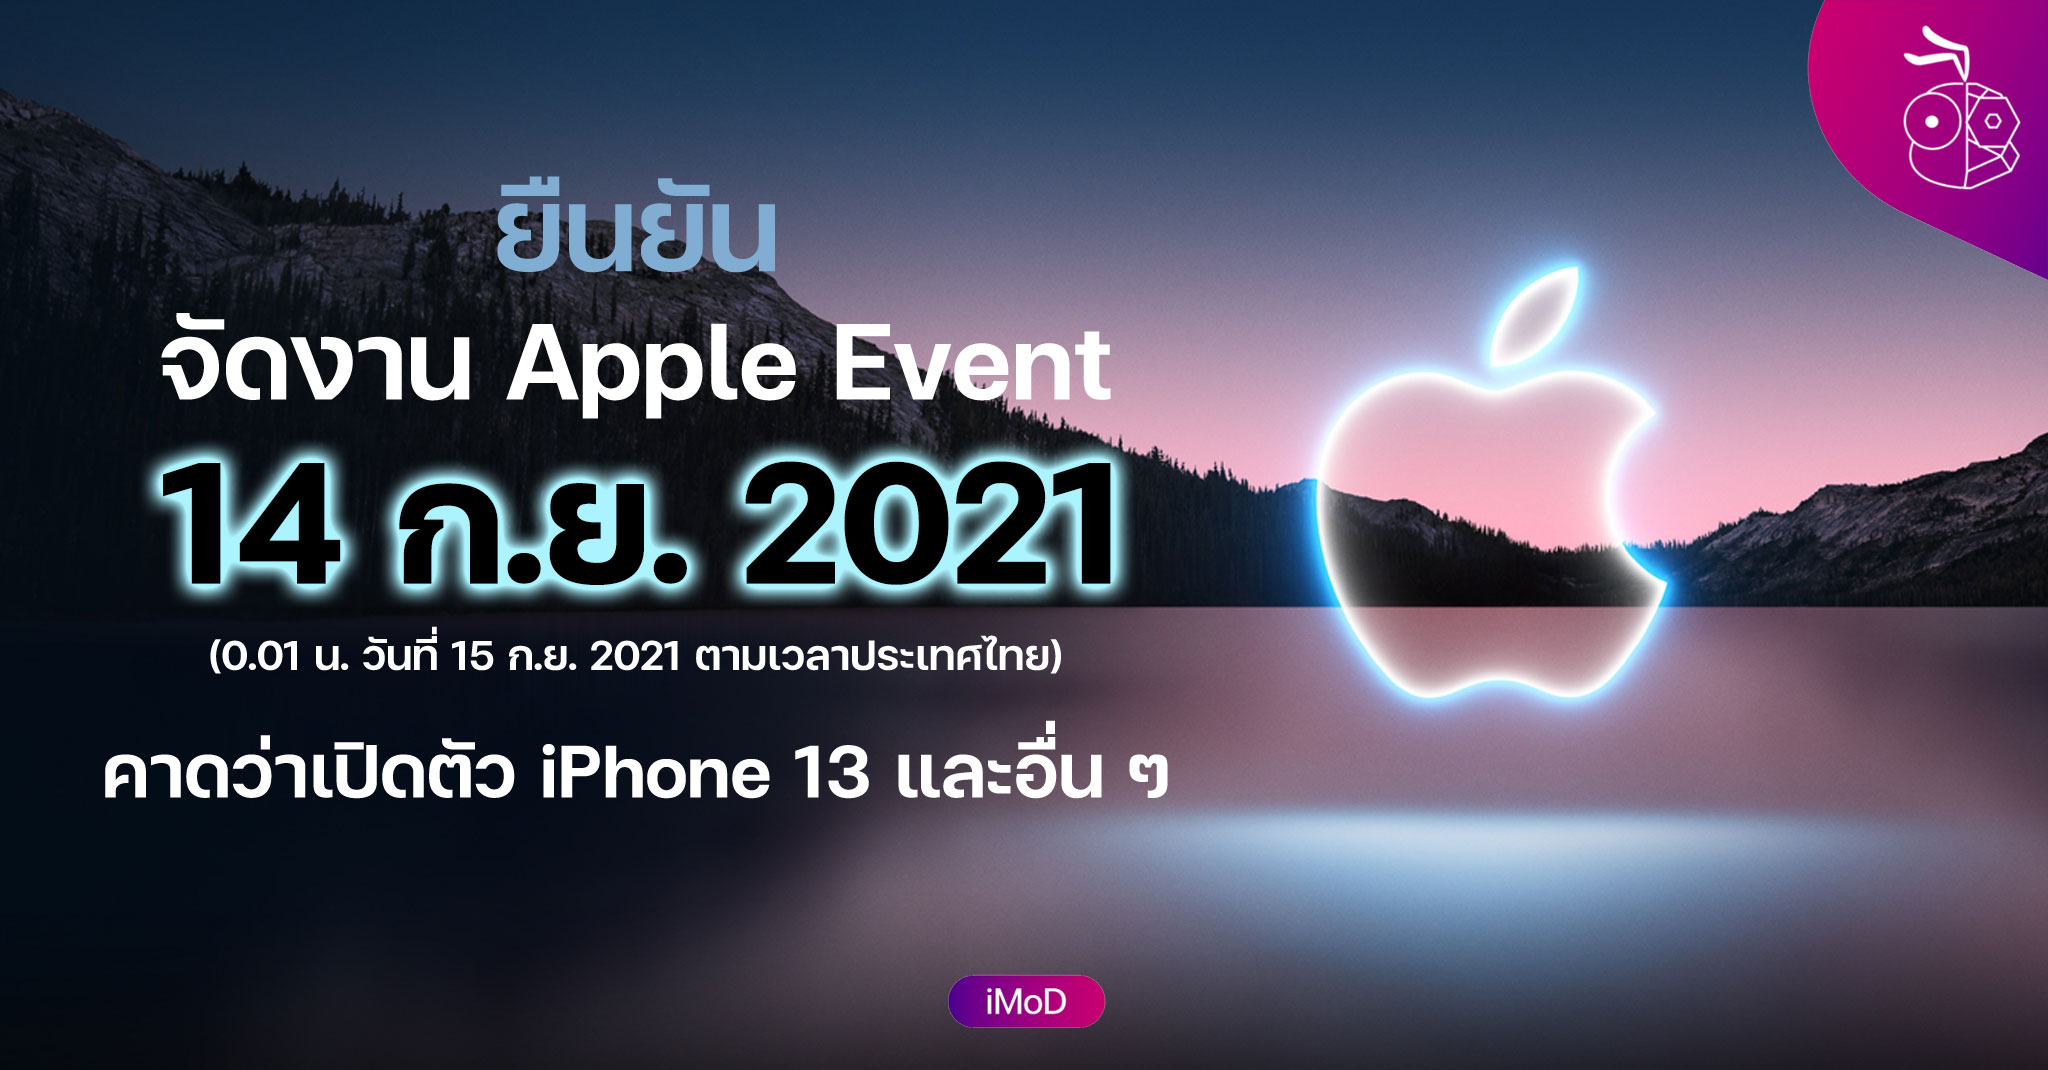 Ready go to ... https://www.iphonemod.net/apple-event-confirm-event-14-sept-2021.html [ ยืนยัน Apple ส่งบัตรเชิญงาน Apple Event วันที่ 14 ก.ย. 2021 นี้ คาดเปิดตัว iPhone 13]